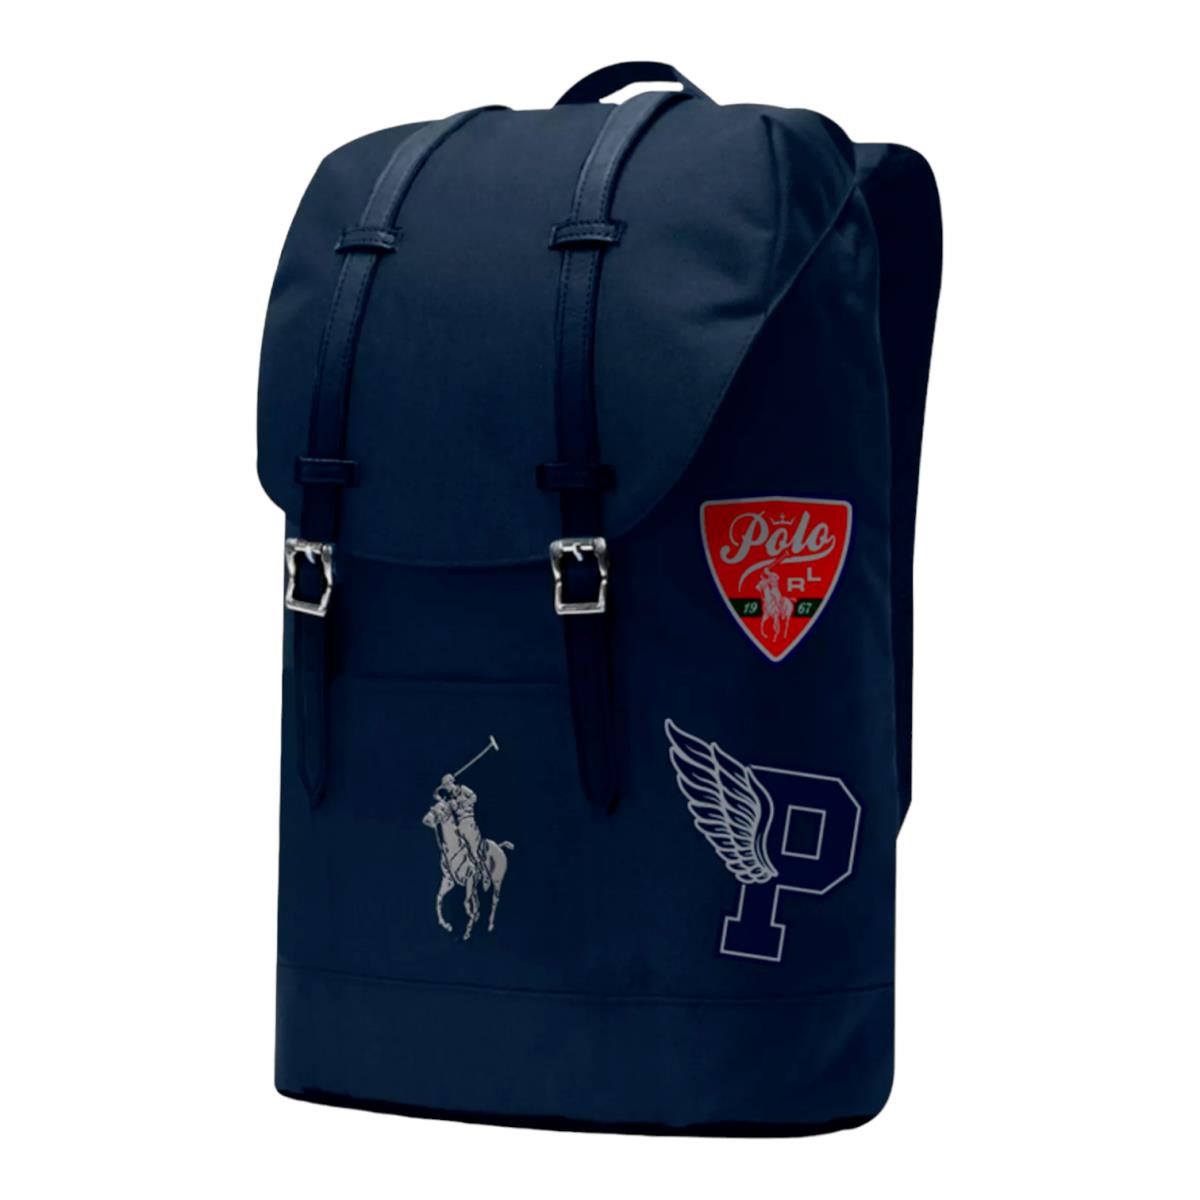 Polo Ralph Lauren Backpack Polo Fragrances Travel School Gym Weekend Bag - Navy - Blue